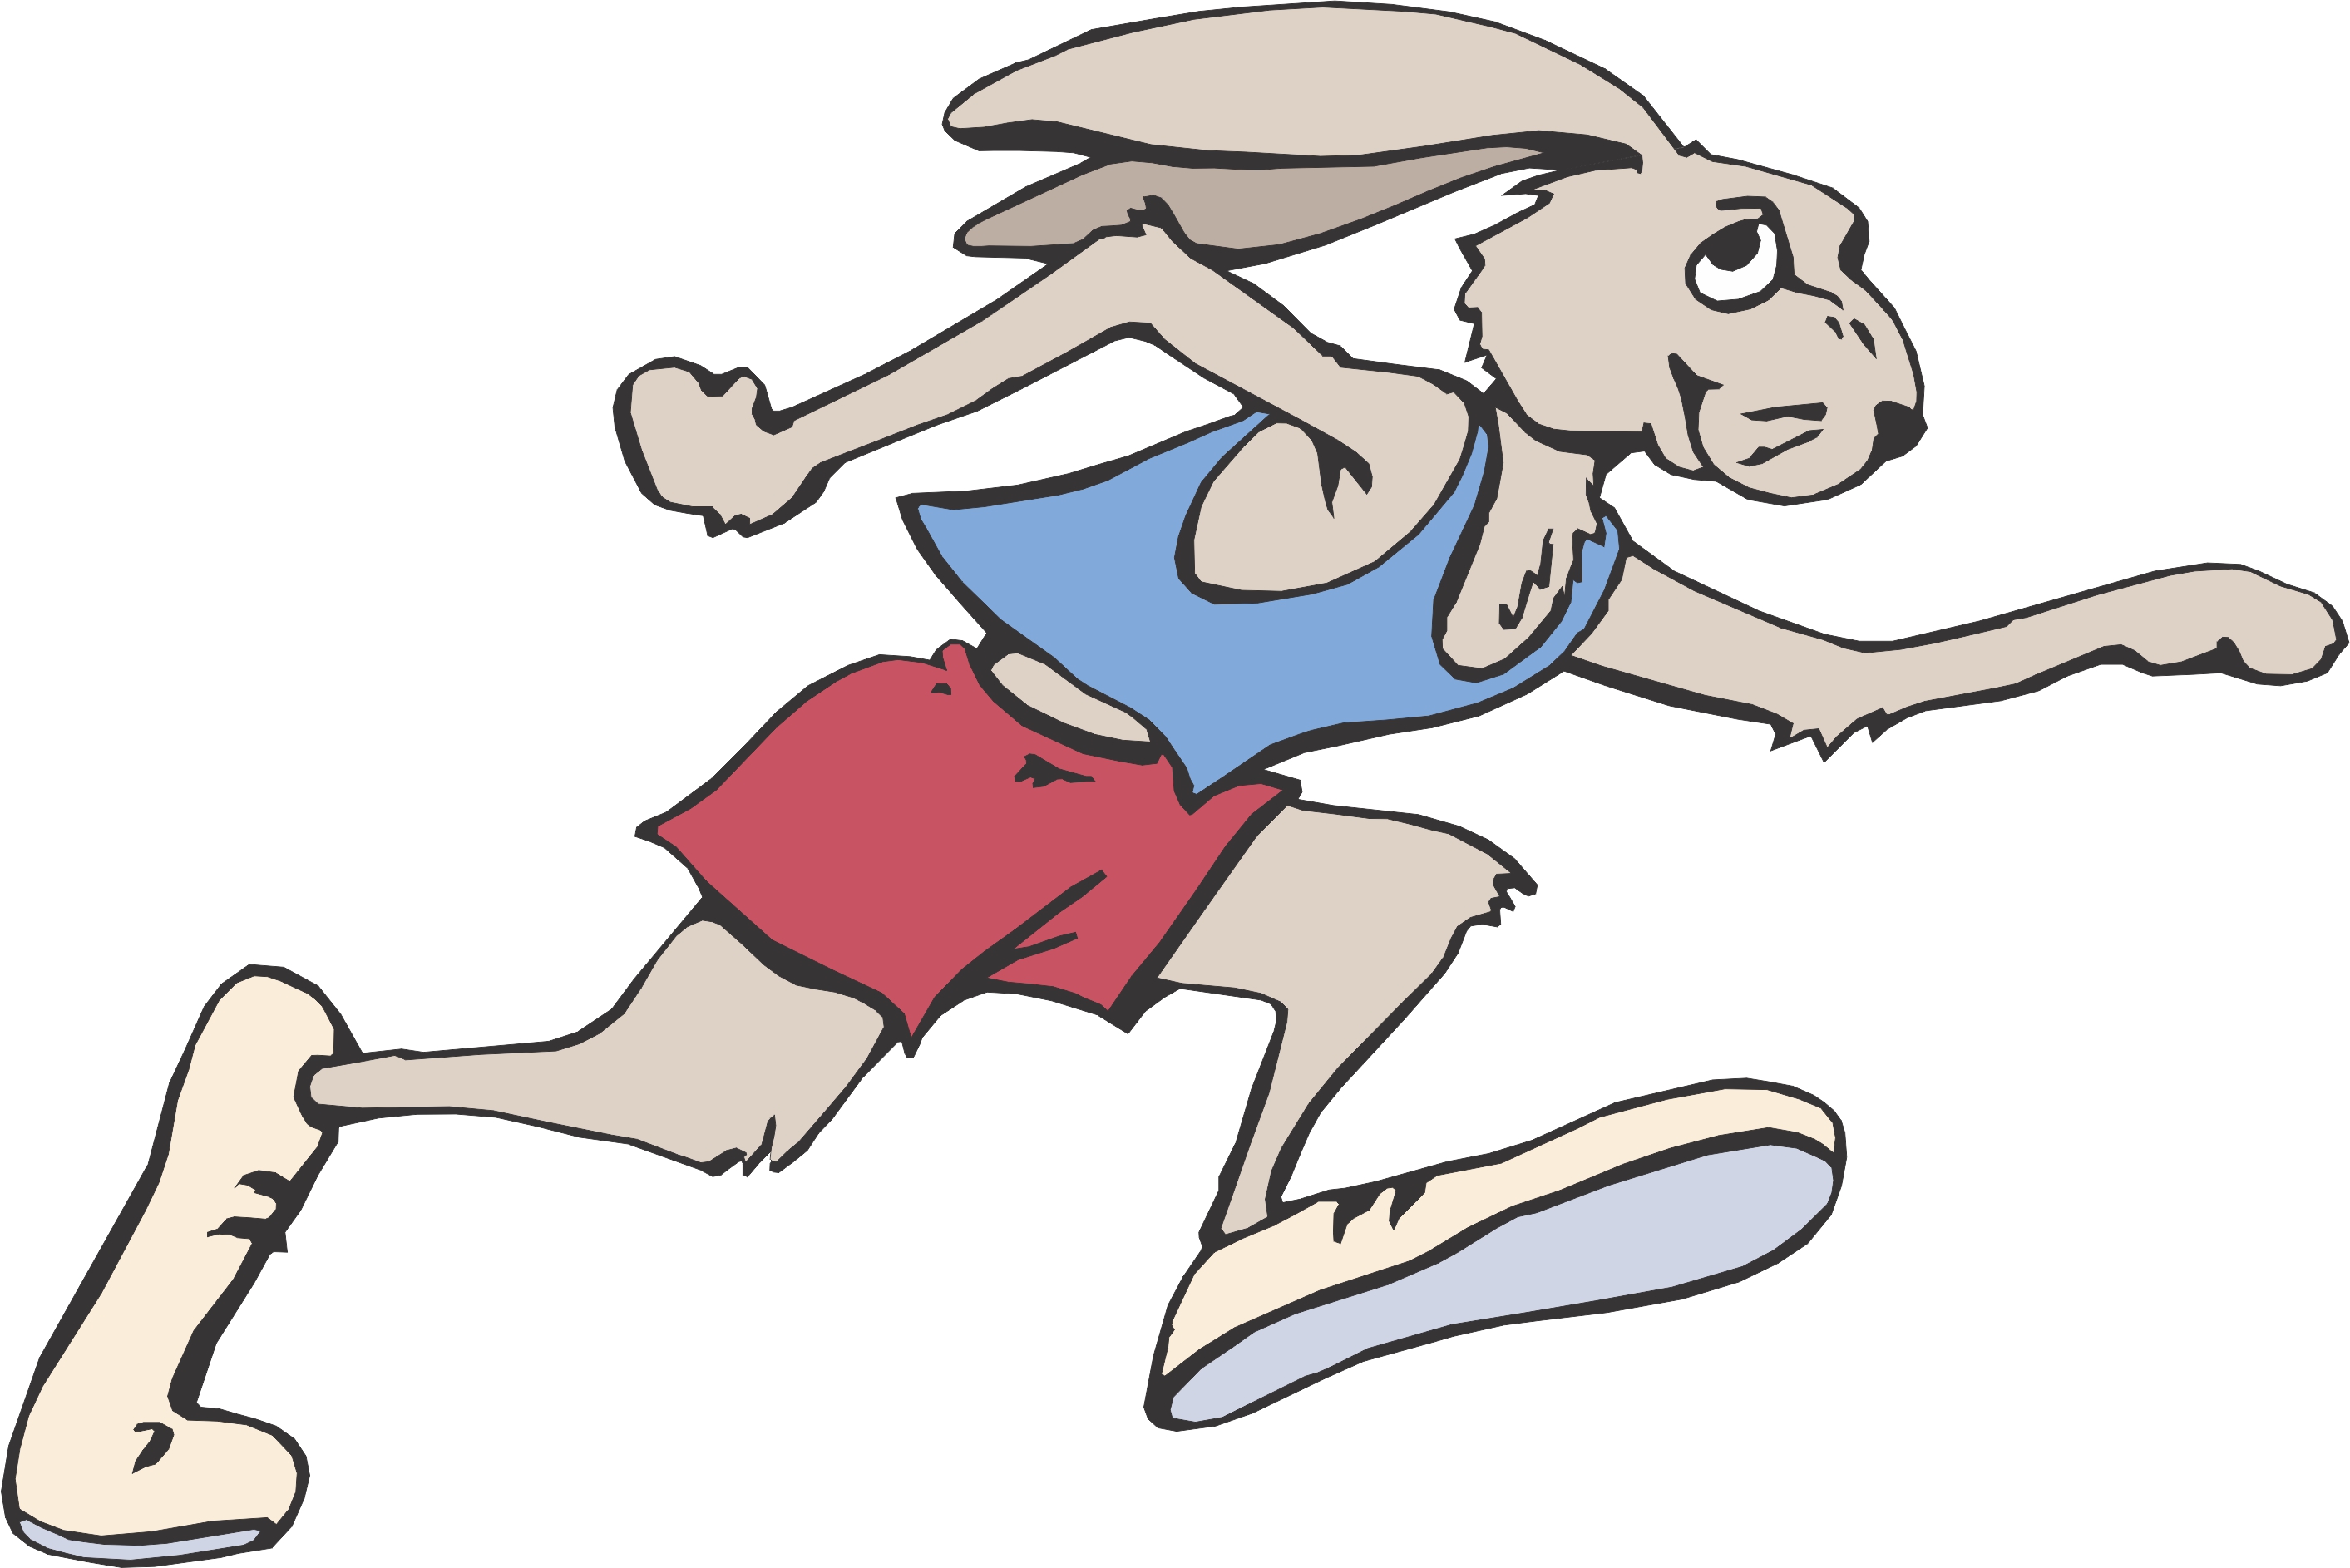 Зайчик убегает. Заяц бежит. Заяц бегун. Мультяшки бегут. Заяц спортсмен.